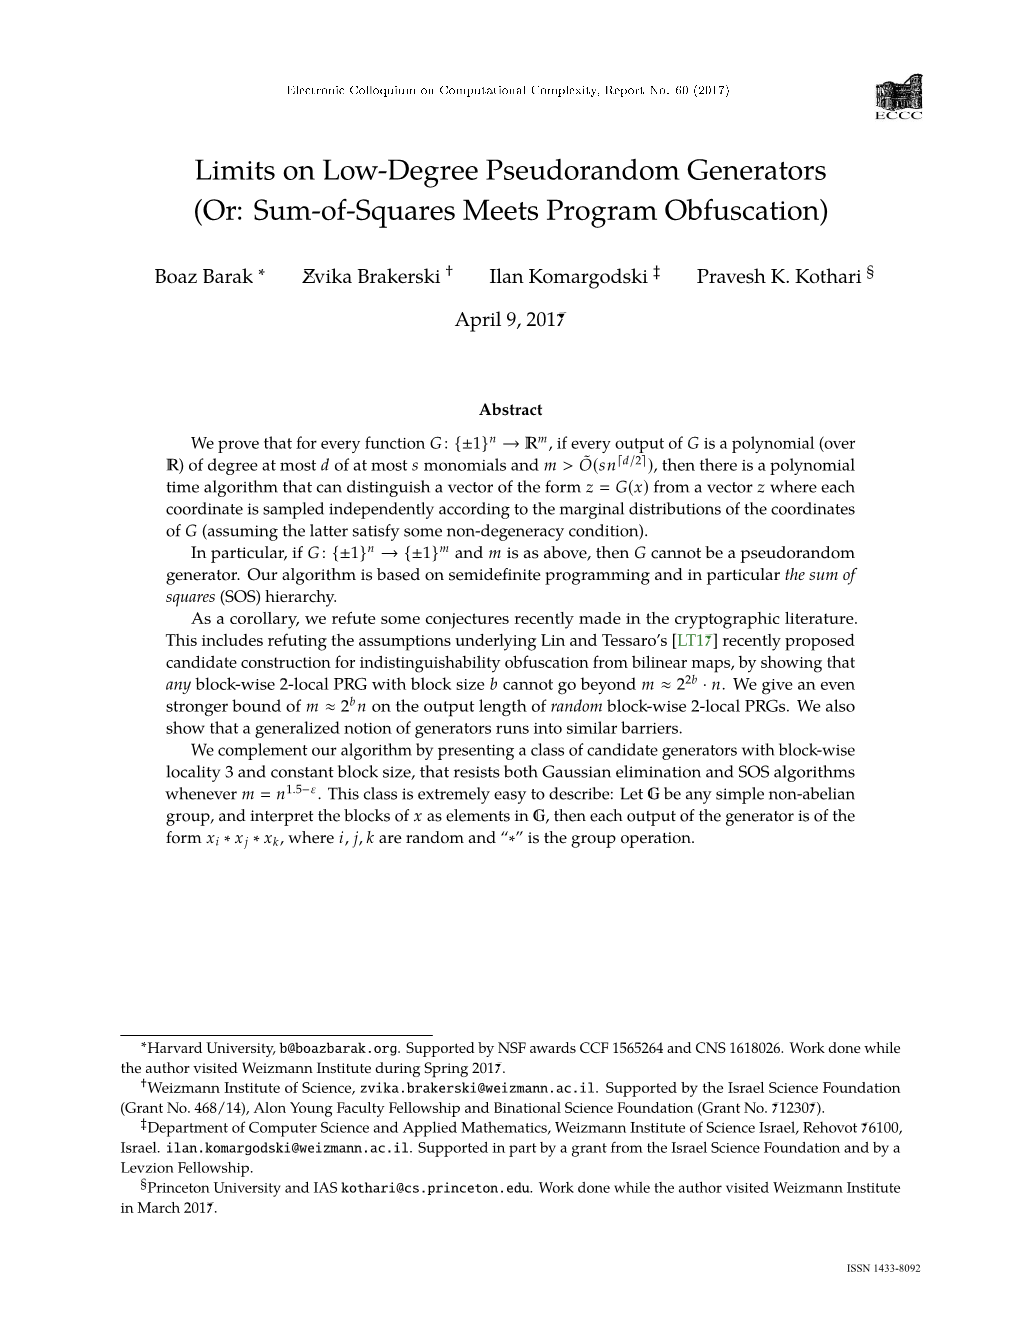 Limits on Low-Degree Pseudorandom Generators (Or: Sum-Of-Squares Meets Program Obfuscation)